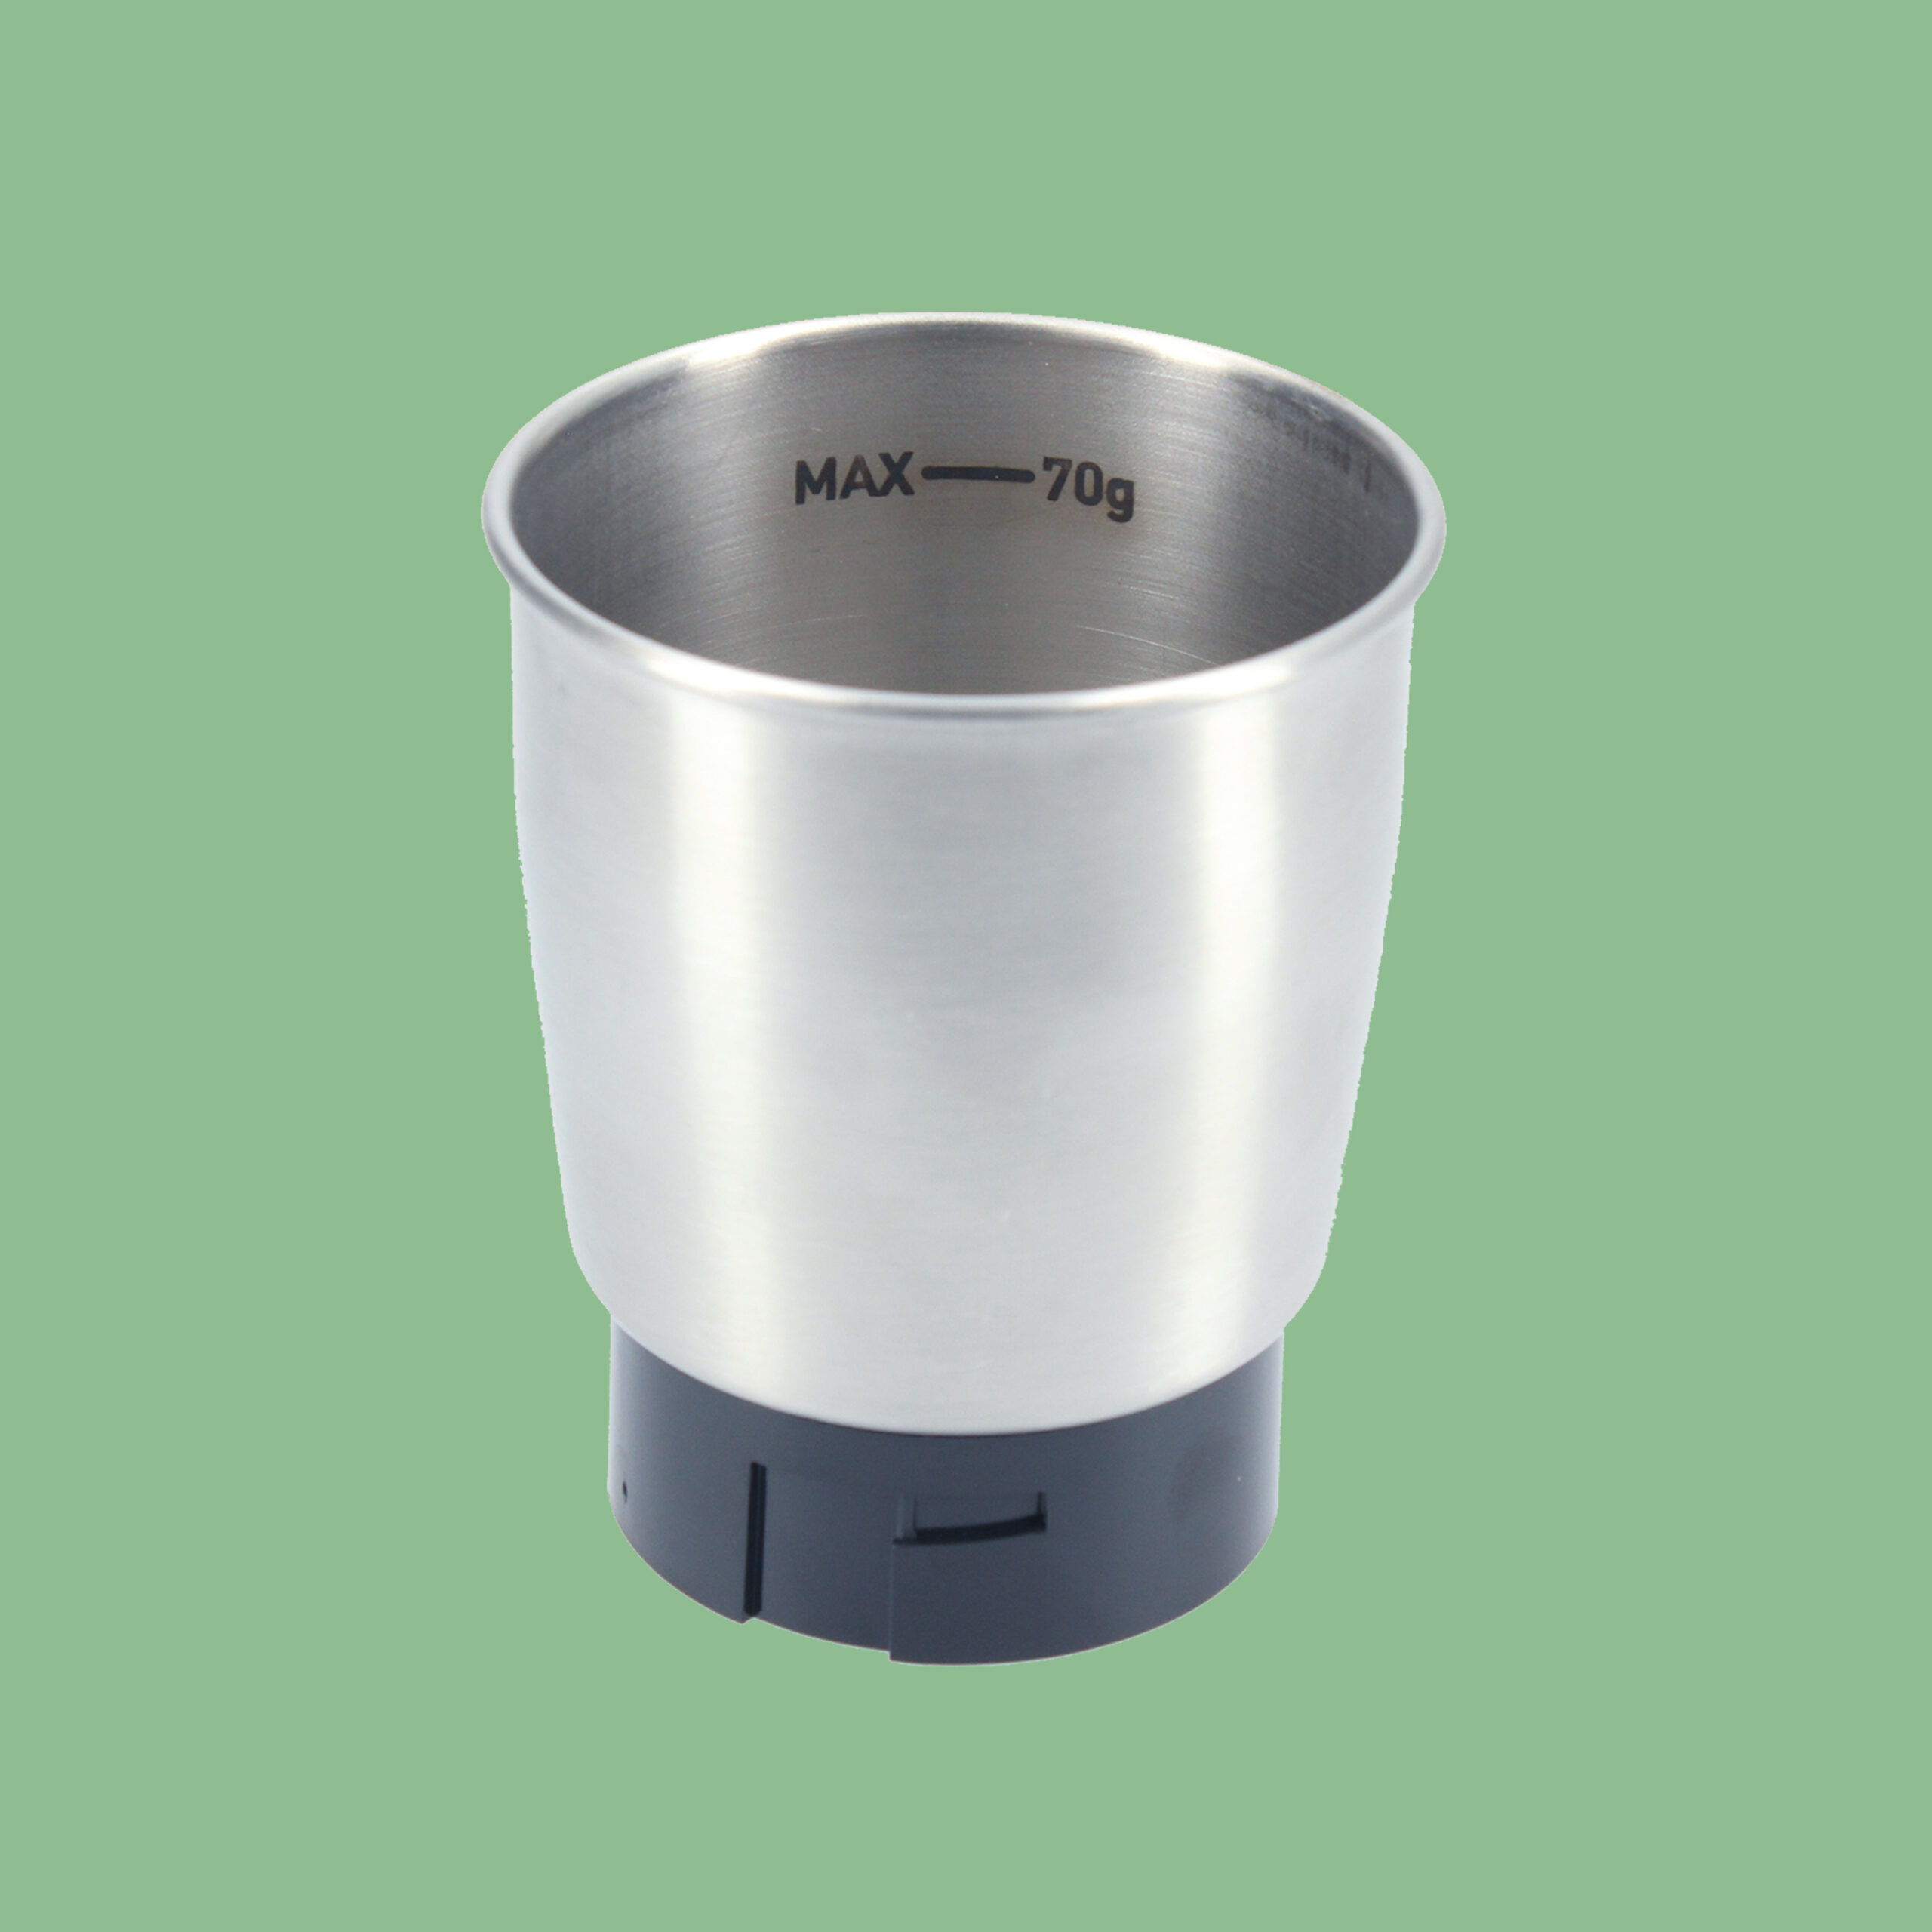 Molinillo de café cónico de cerámica – Molinillo eléctrico lento como  manual, con adaptador, cubo de molienda mejorado, para expreso, vertido,  goteo